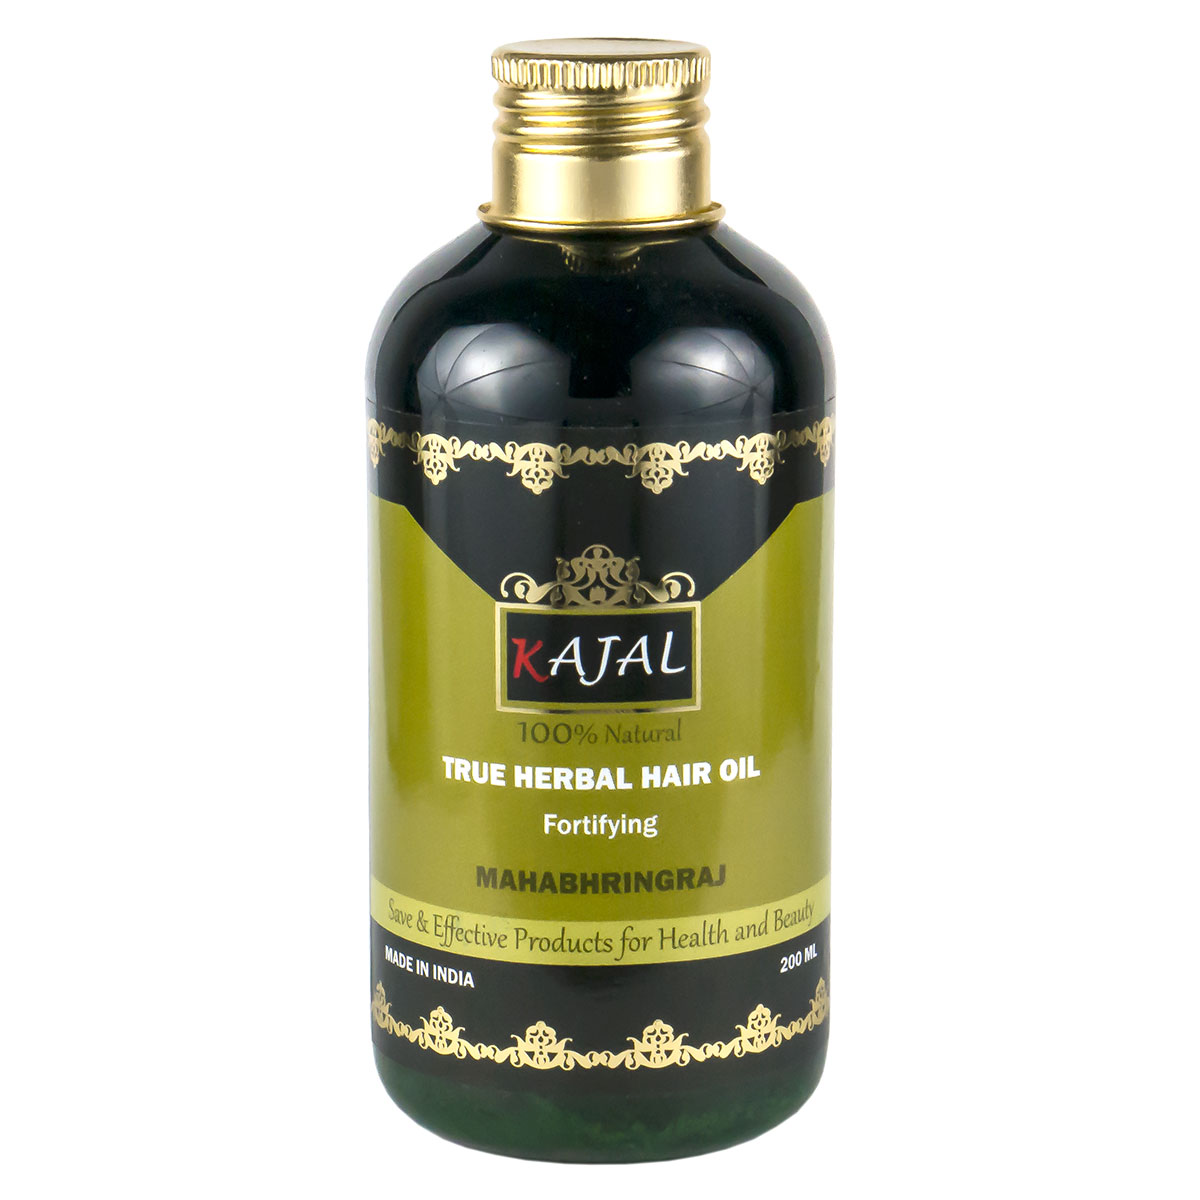 True Herbal Hair Oil  MAHABHRINGRAJ, Fortifying, Kajal (Травяное укрепляющее масло для волос МАХАБРИНГРАДЖ, Каджал), 200 мл. - СРОК ГОДНОСТИ ПО ДЕКАБРЬ 2023 ГОДА